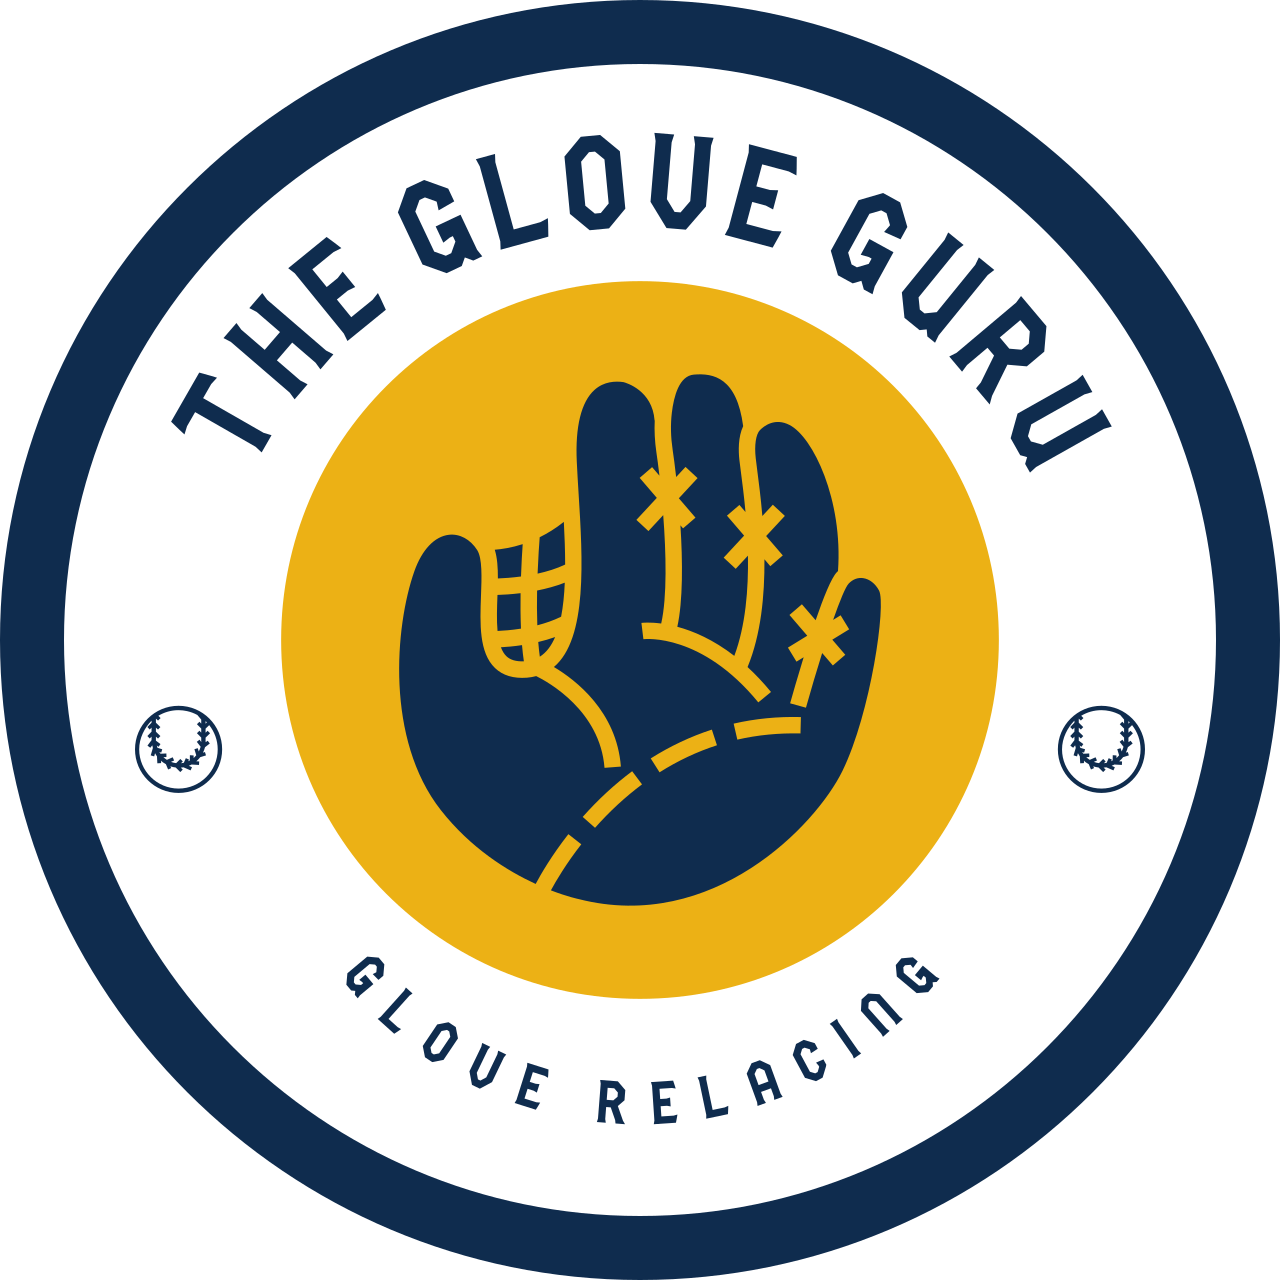 The Glove Guru's logo